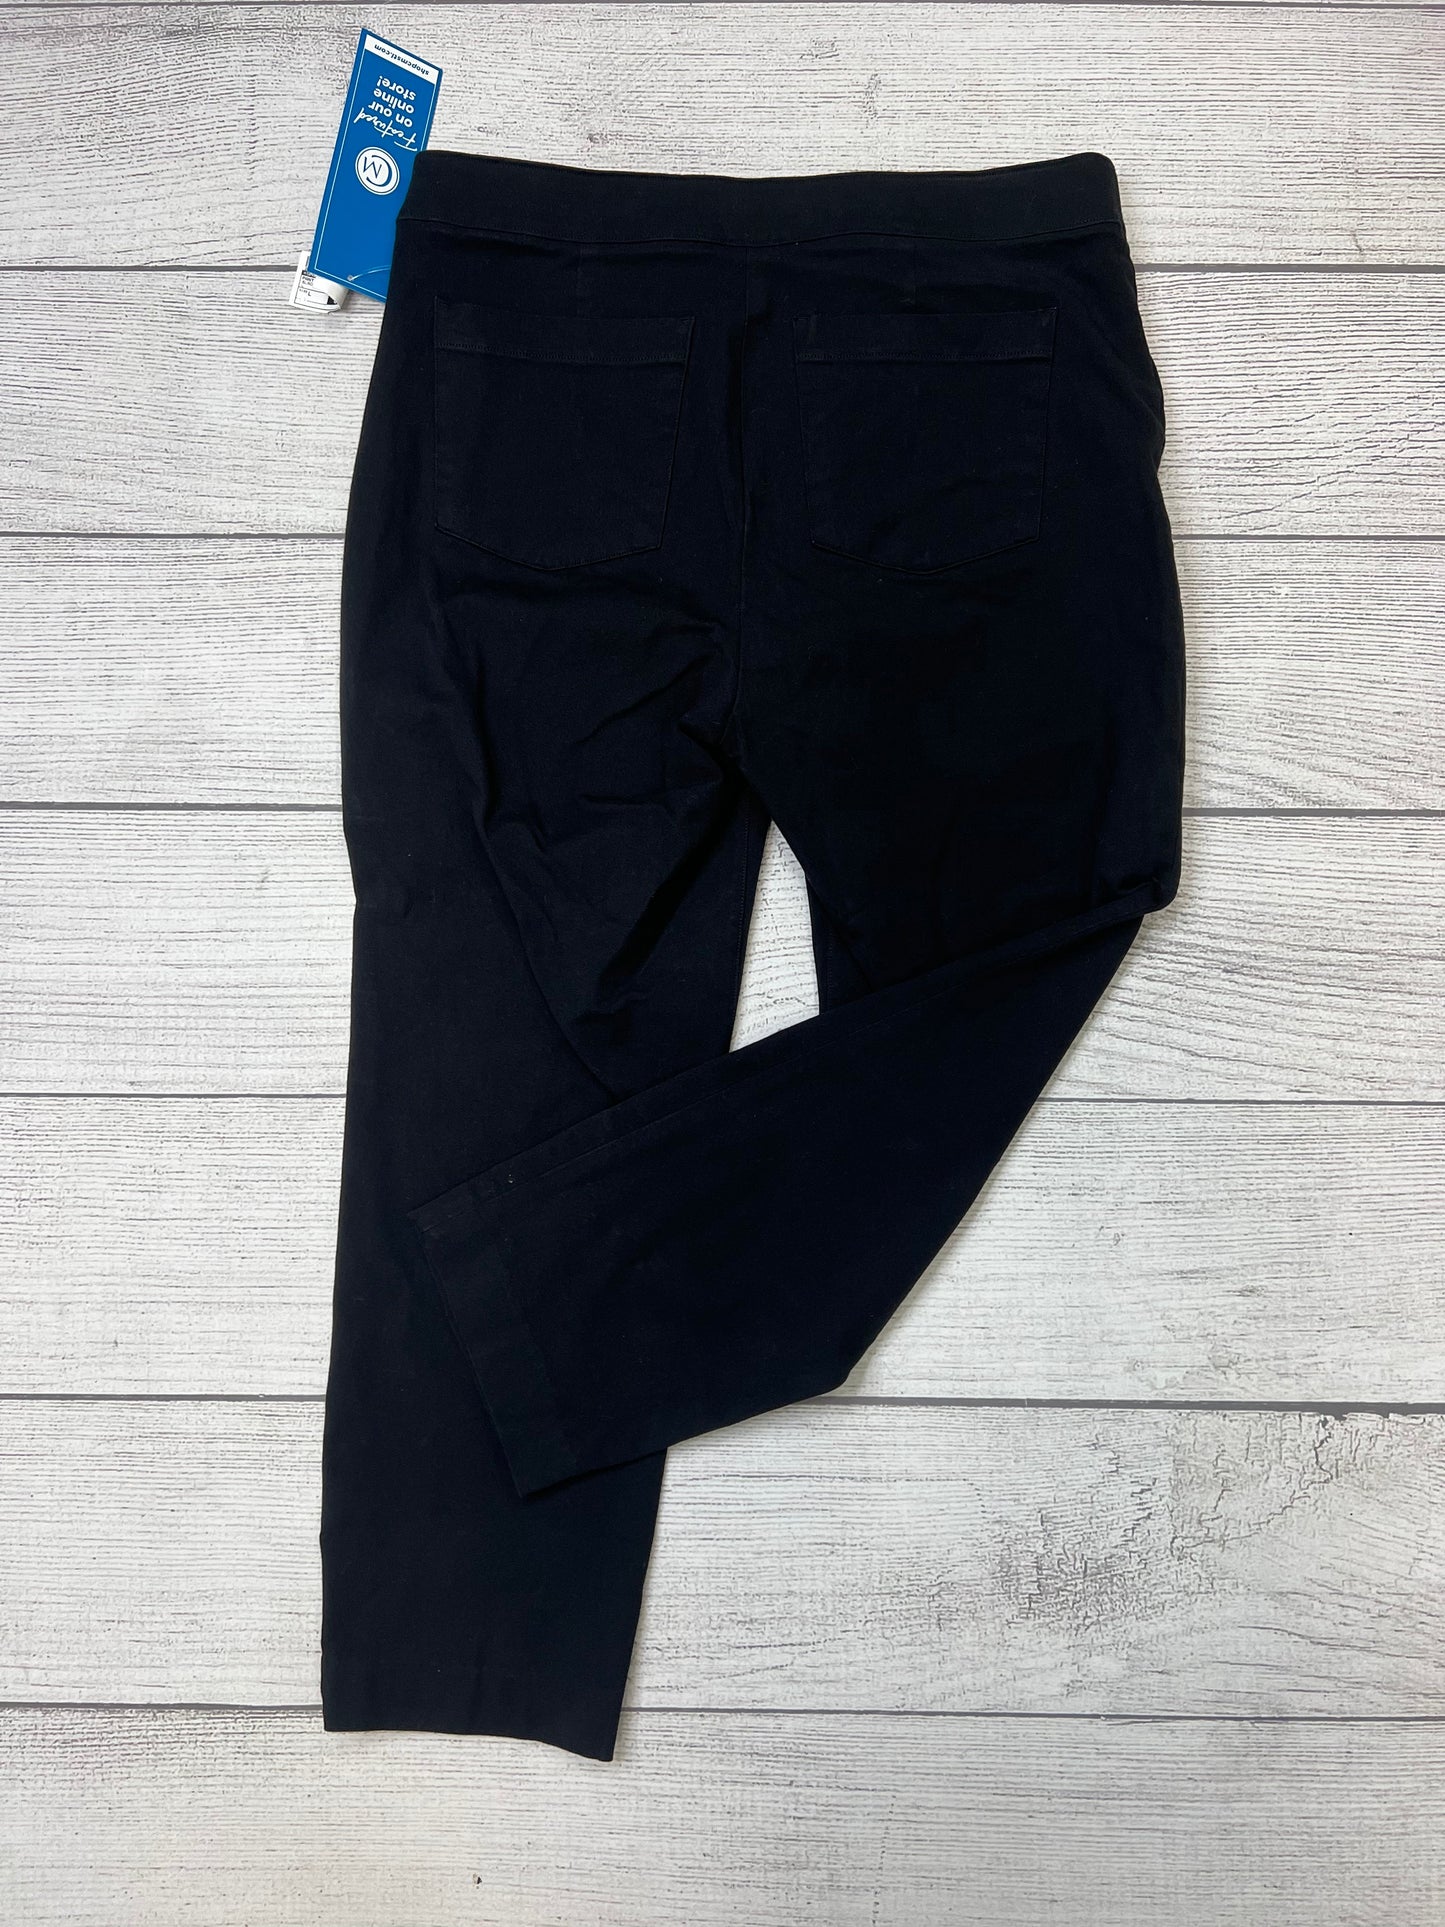 Black Pants Designer Spanx, Size L